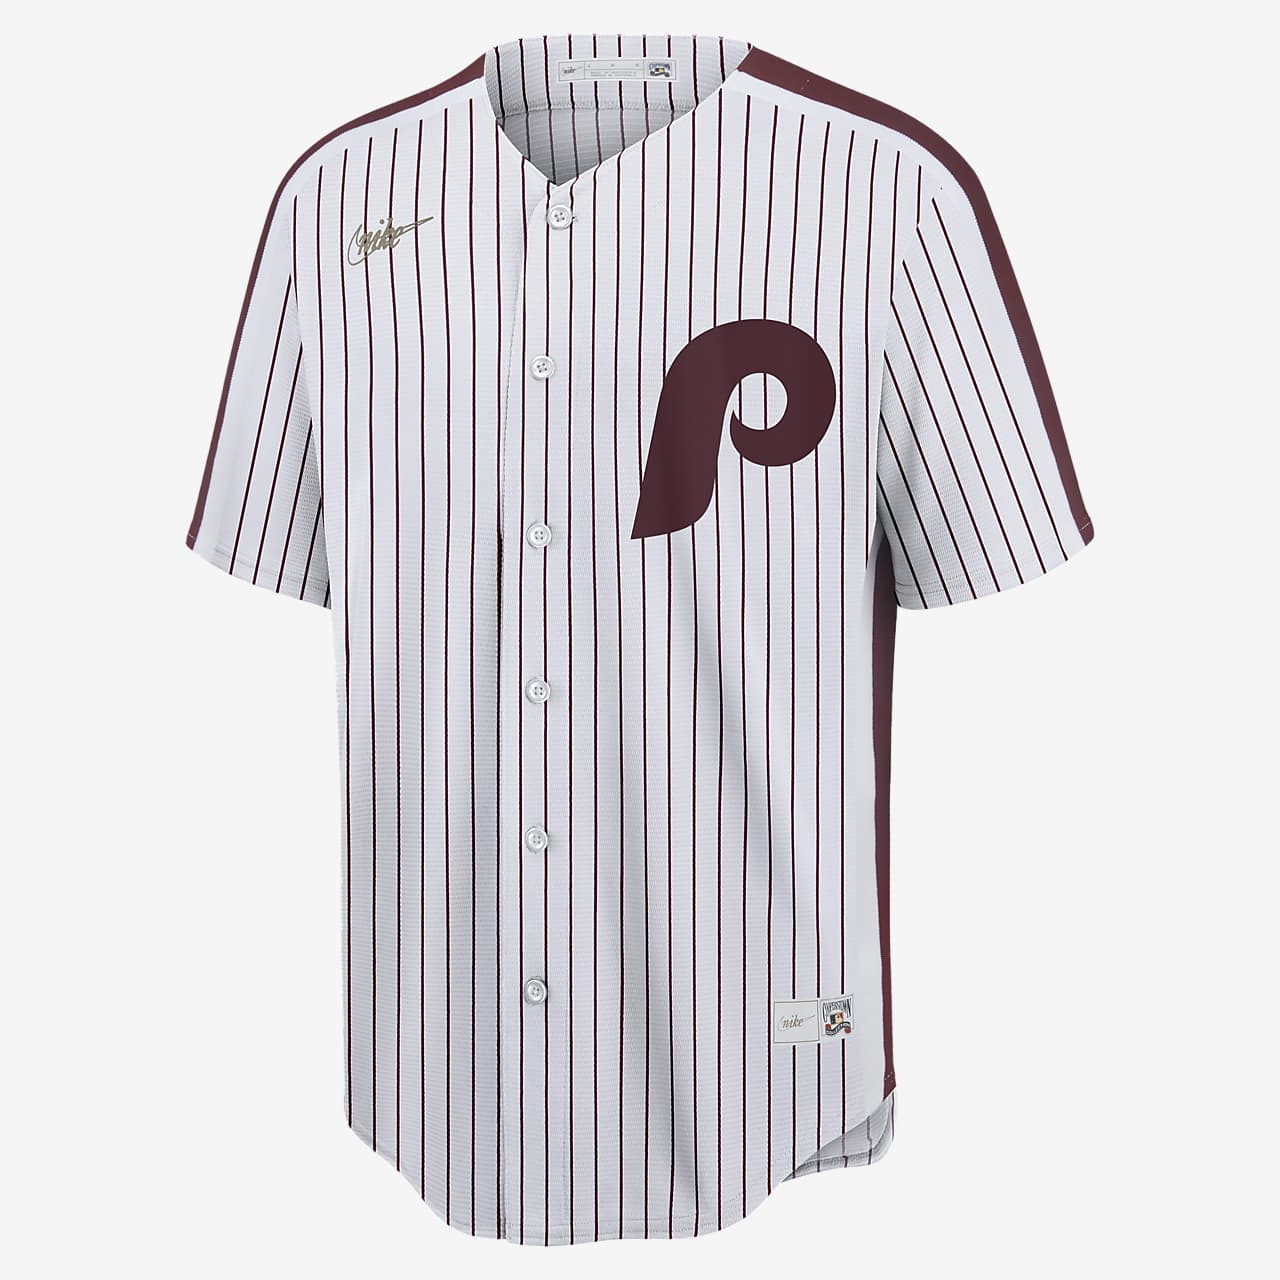 phillies baseball clothes